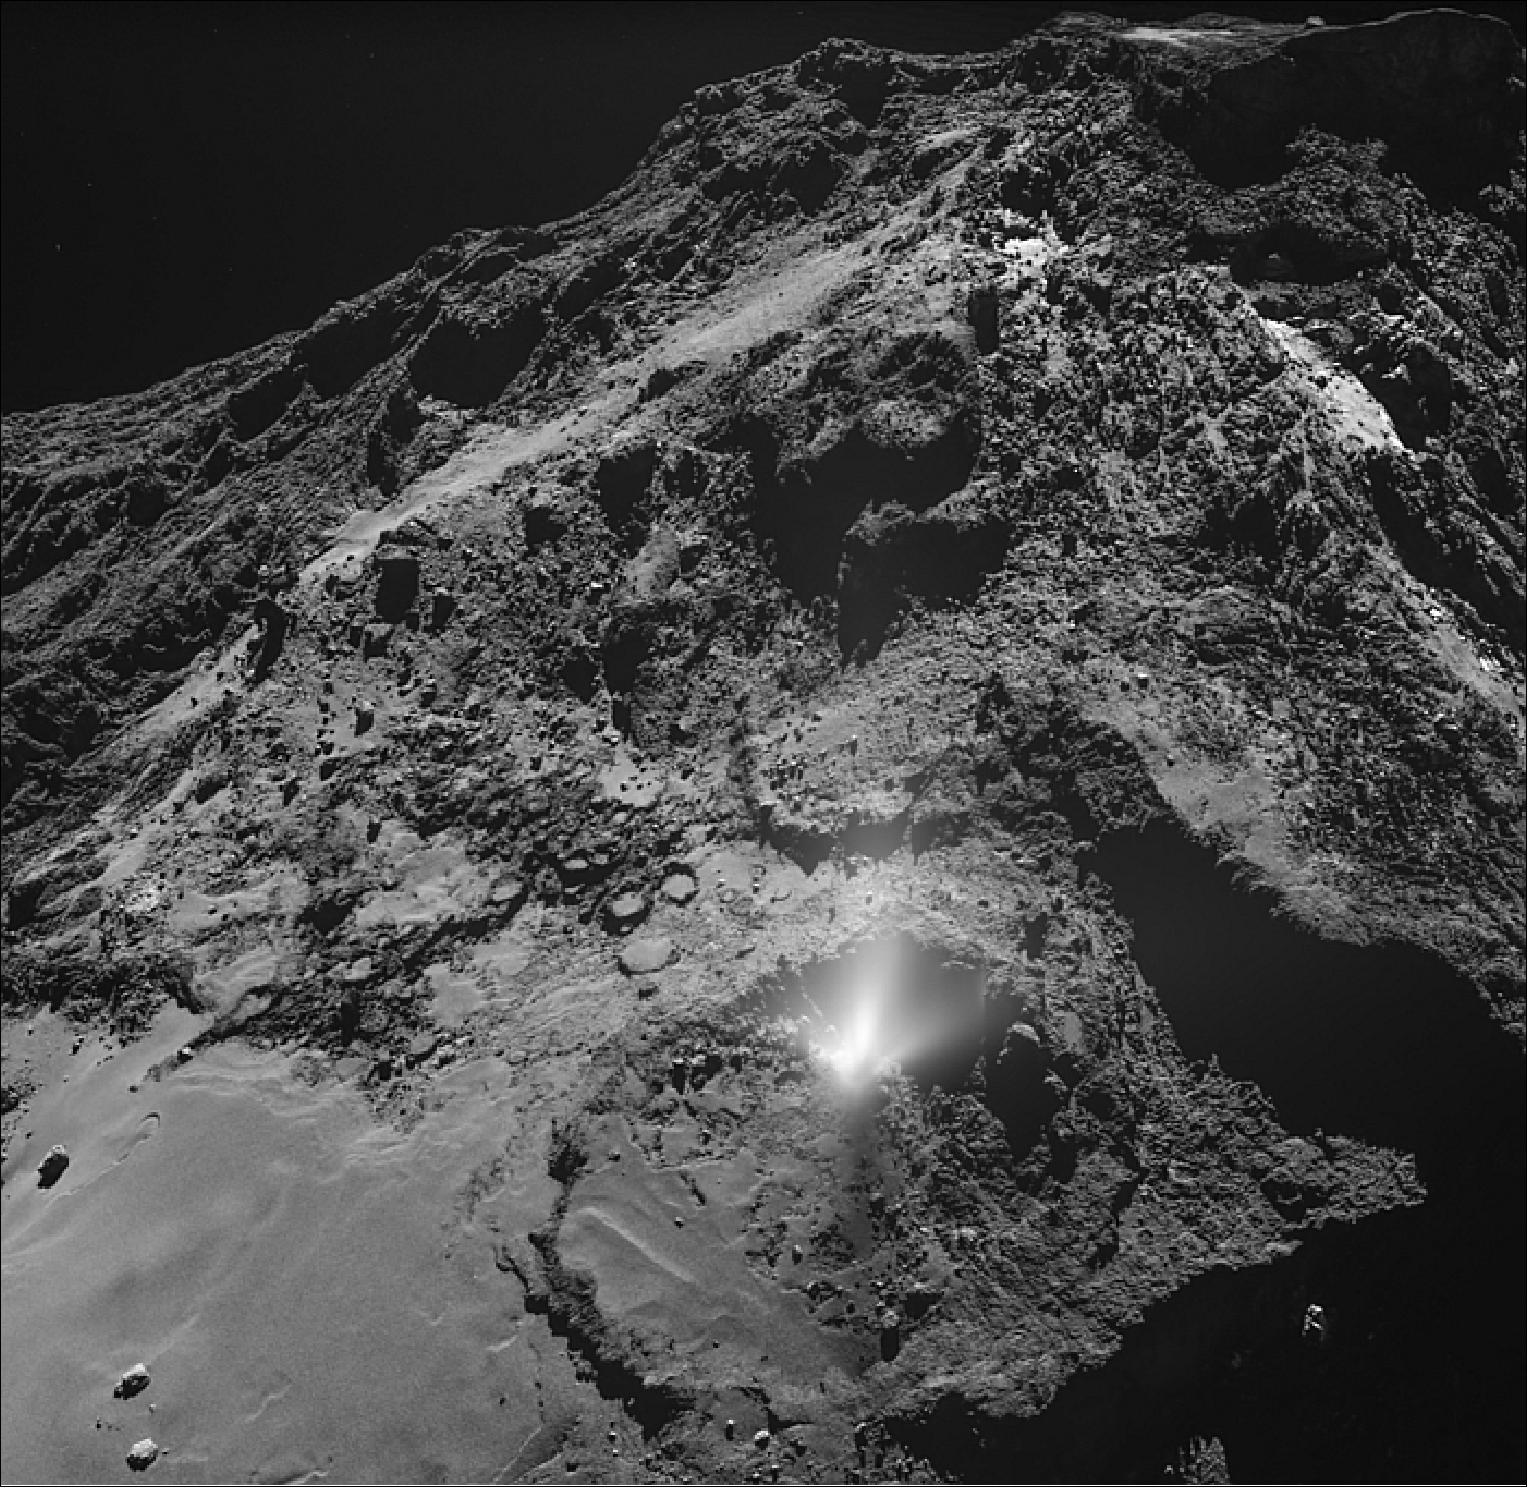 Figure 77: Comet plume (image credit: ESA/Rosetta/MPS for OSIRIS Team MPS/UPD/LAM/IAA/SSO/INTA/UPM/DASP/IDA)